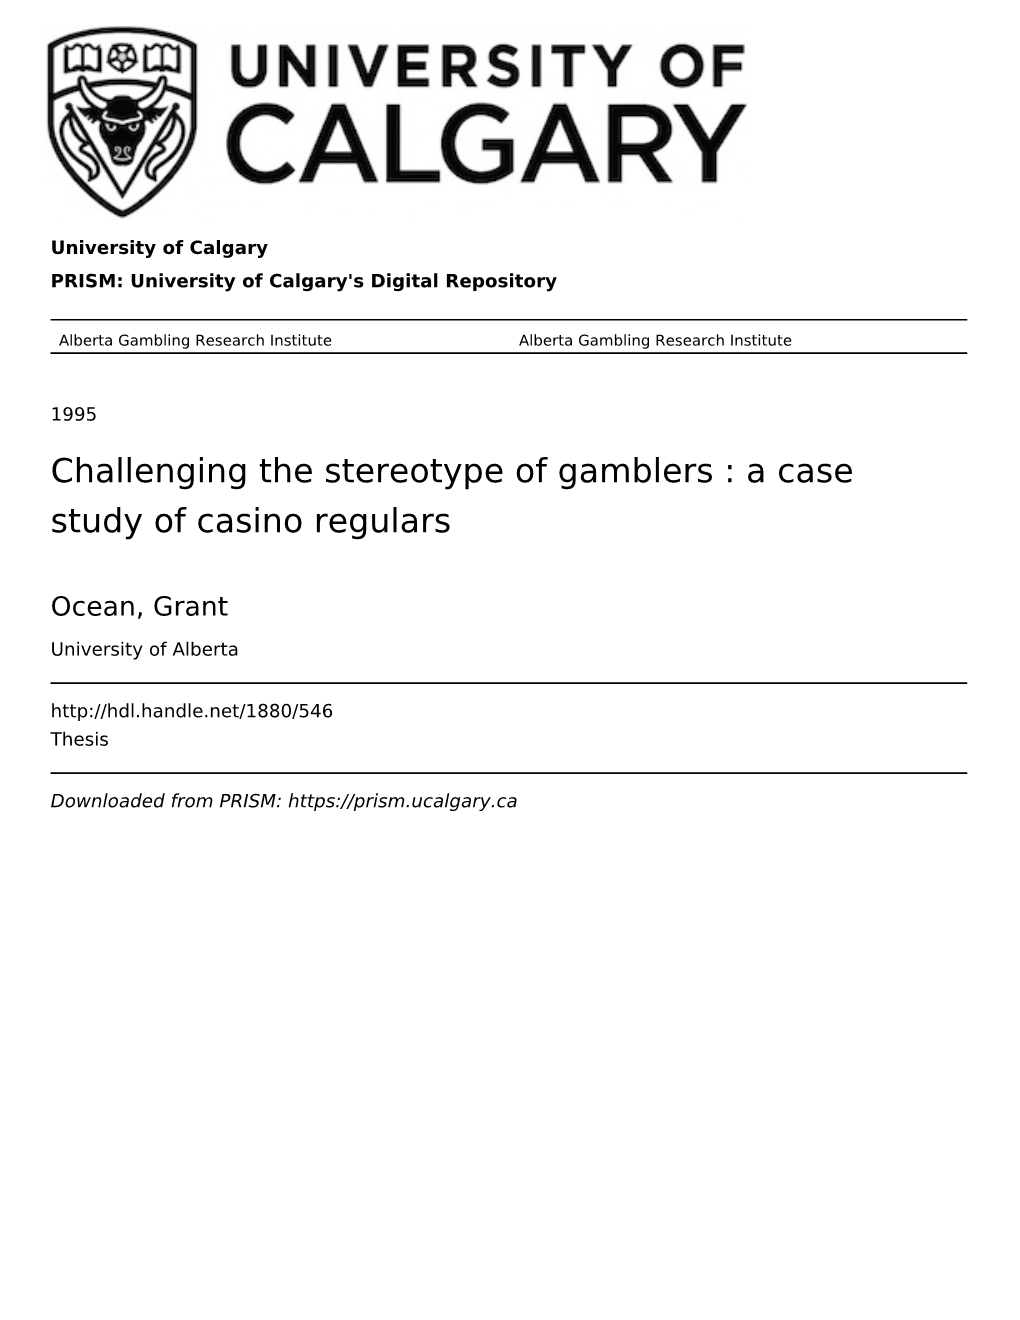 A Case Study of Casino Regulars